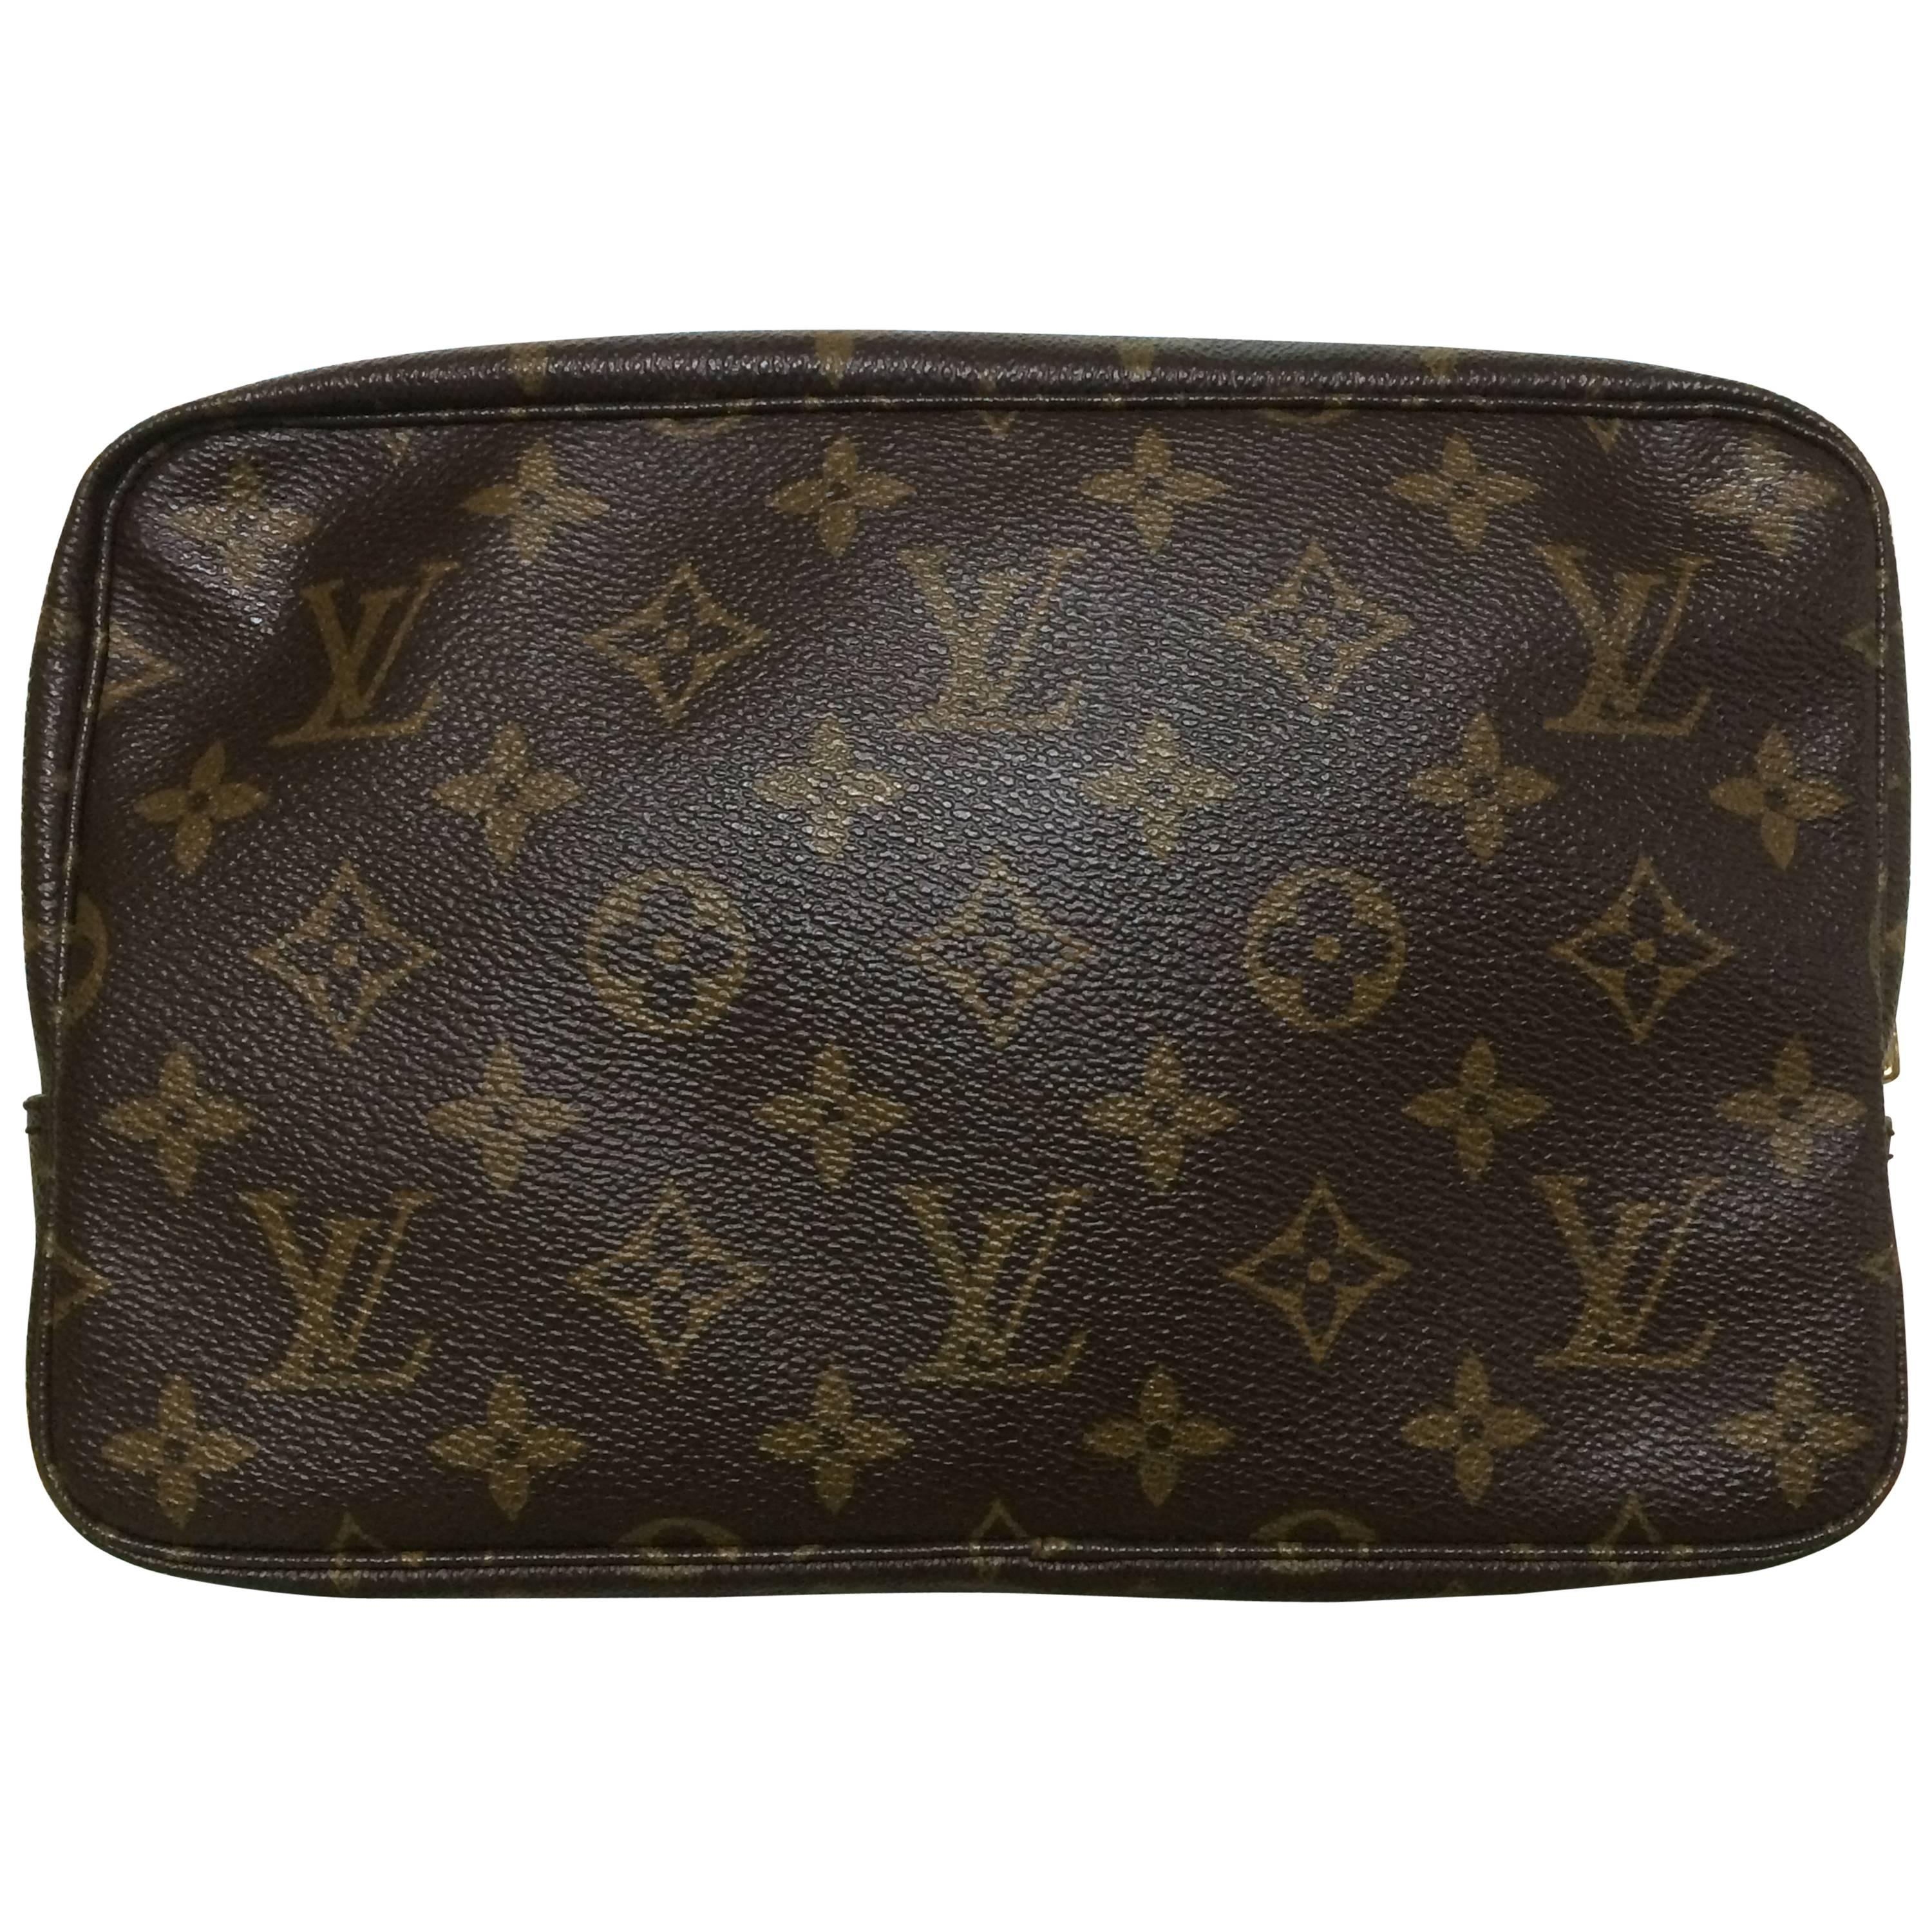 80's Vintage Louis Vuitton classic monogram cosmetic and toilet pouch bag Unisex